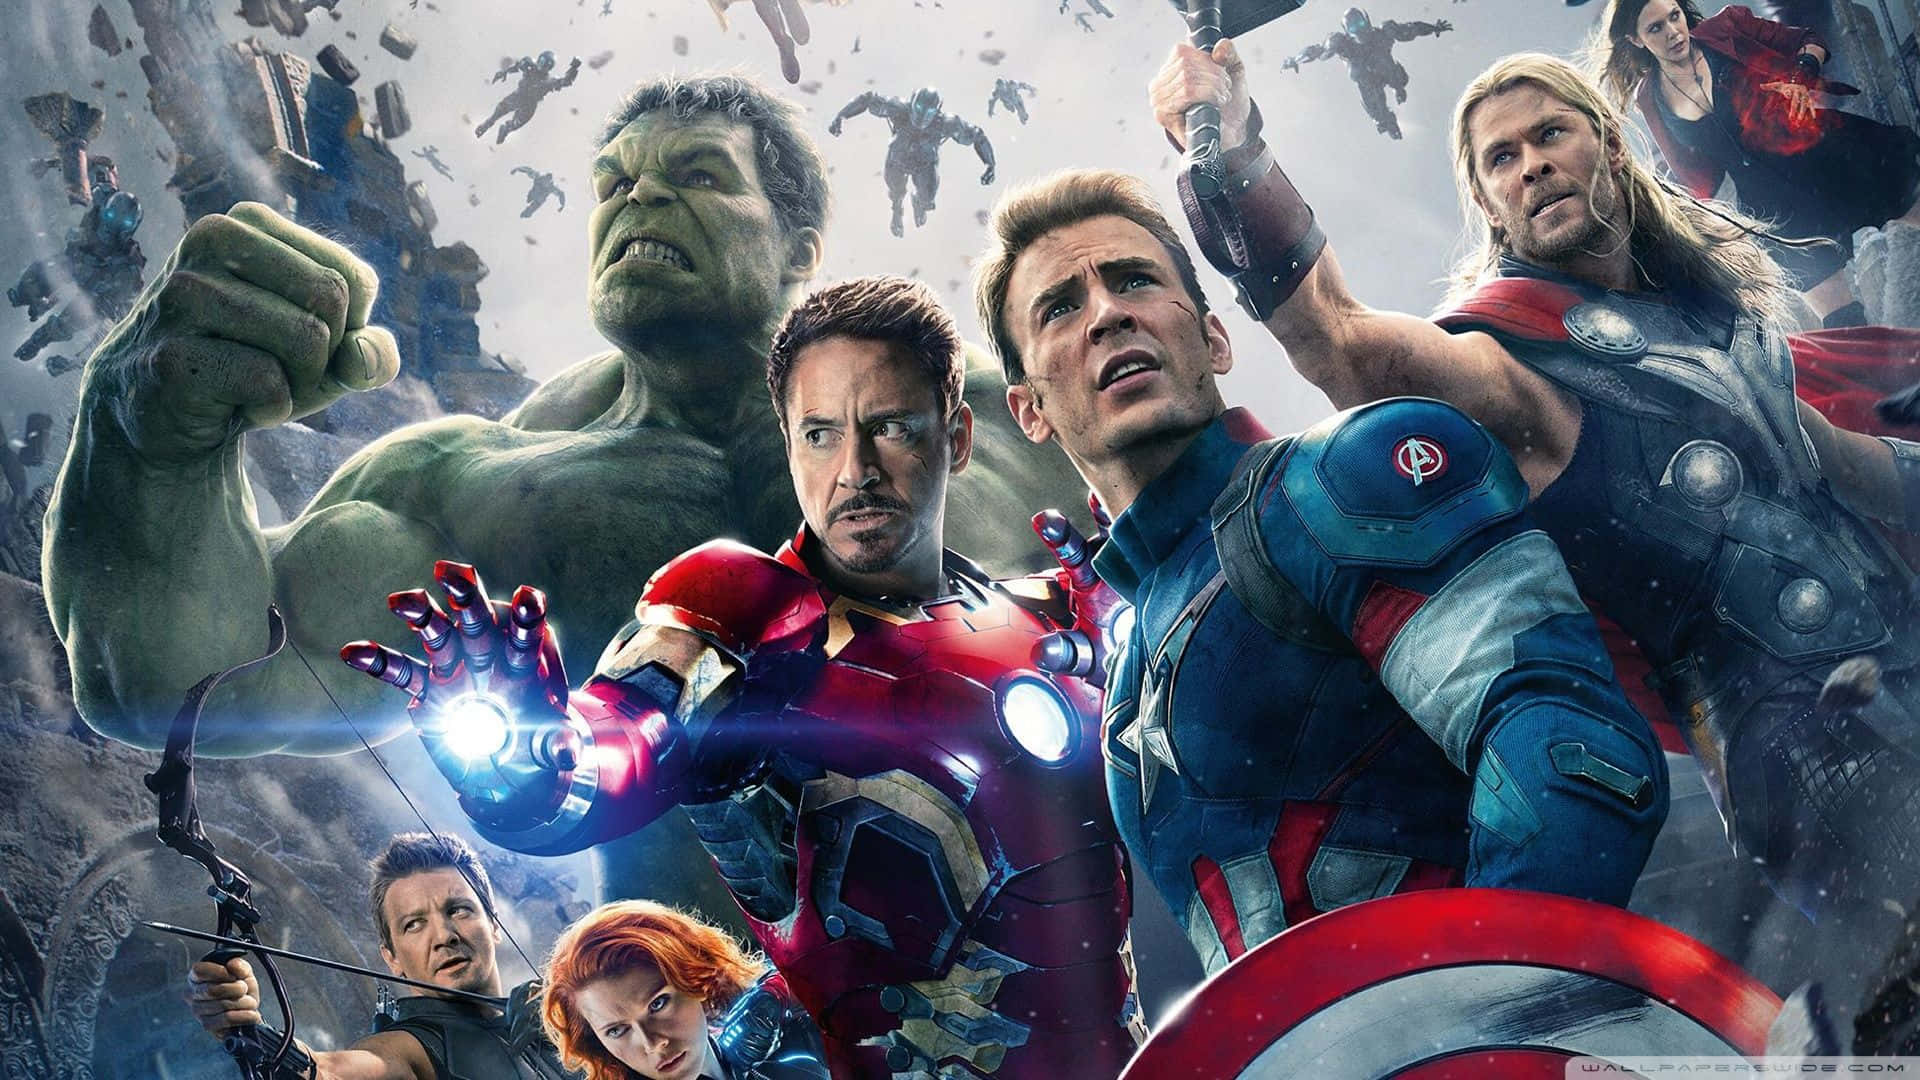 "The Avengers Assemble Again" Wallpaper